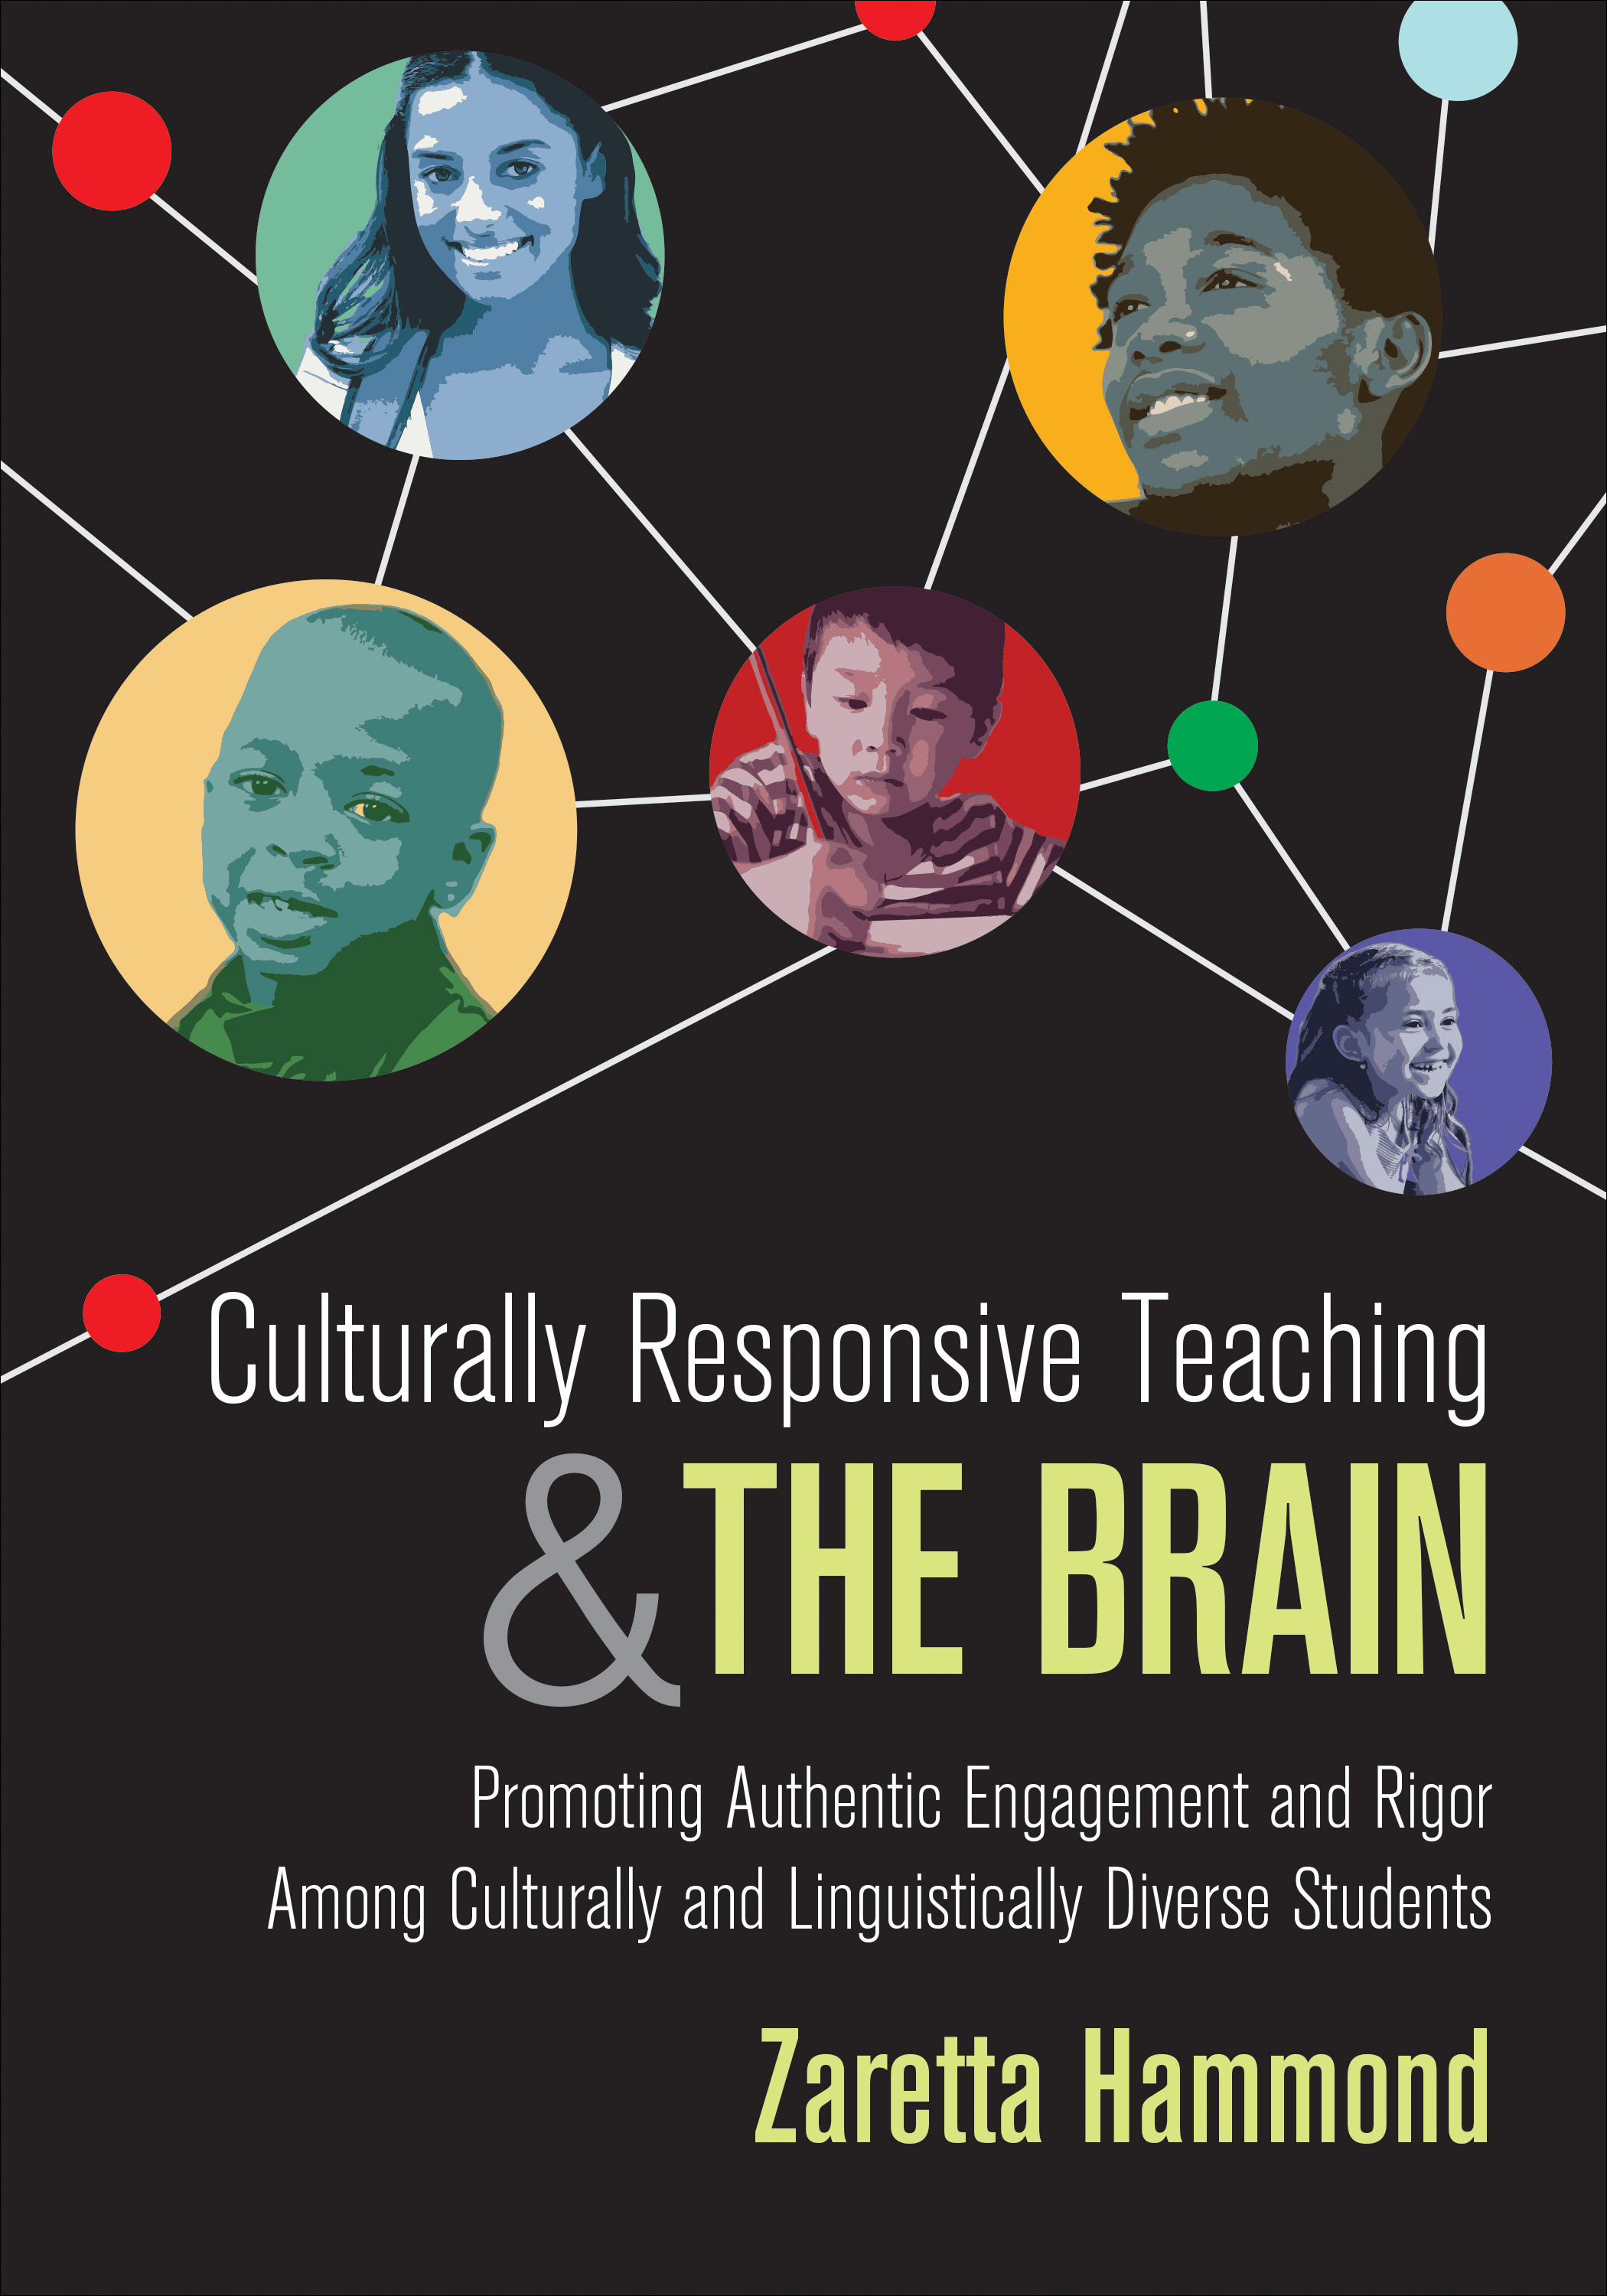 Zaretta Hammond: Culturally responsive teaching and the brain (2015)